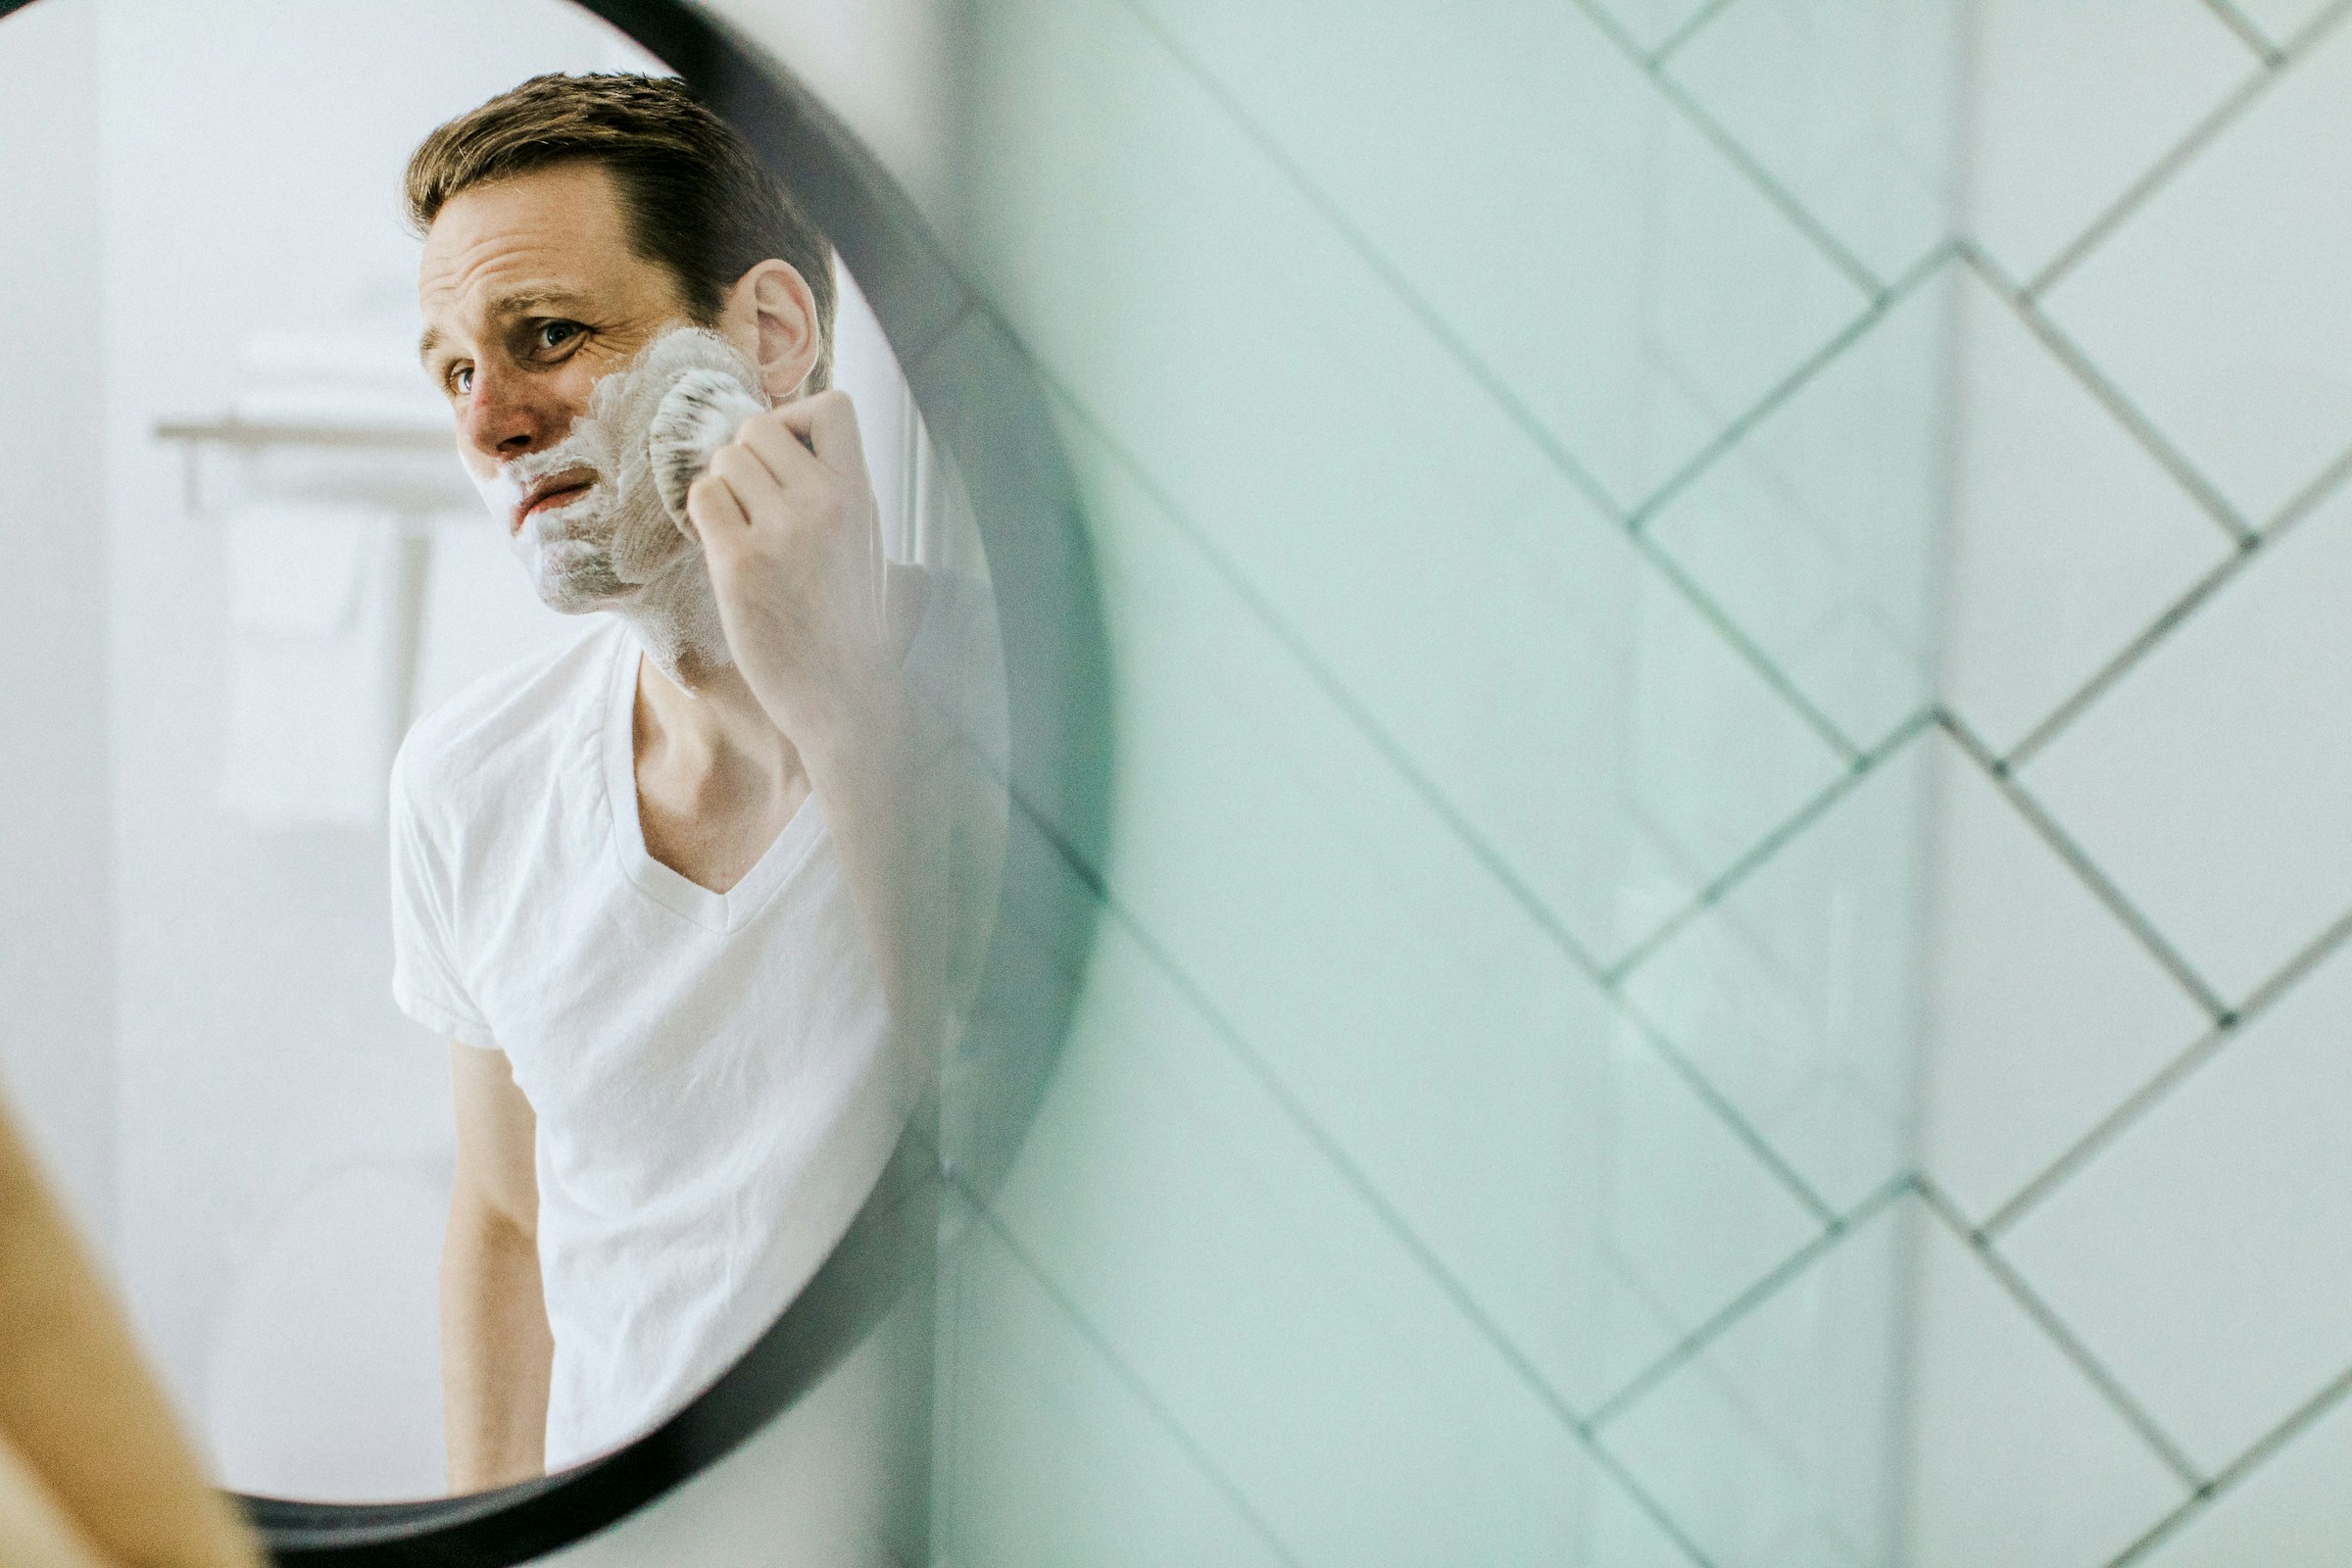 A man shaving in a mirror | Source: Unsplash